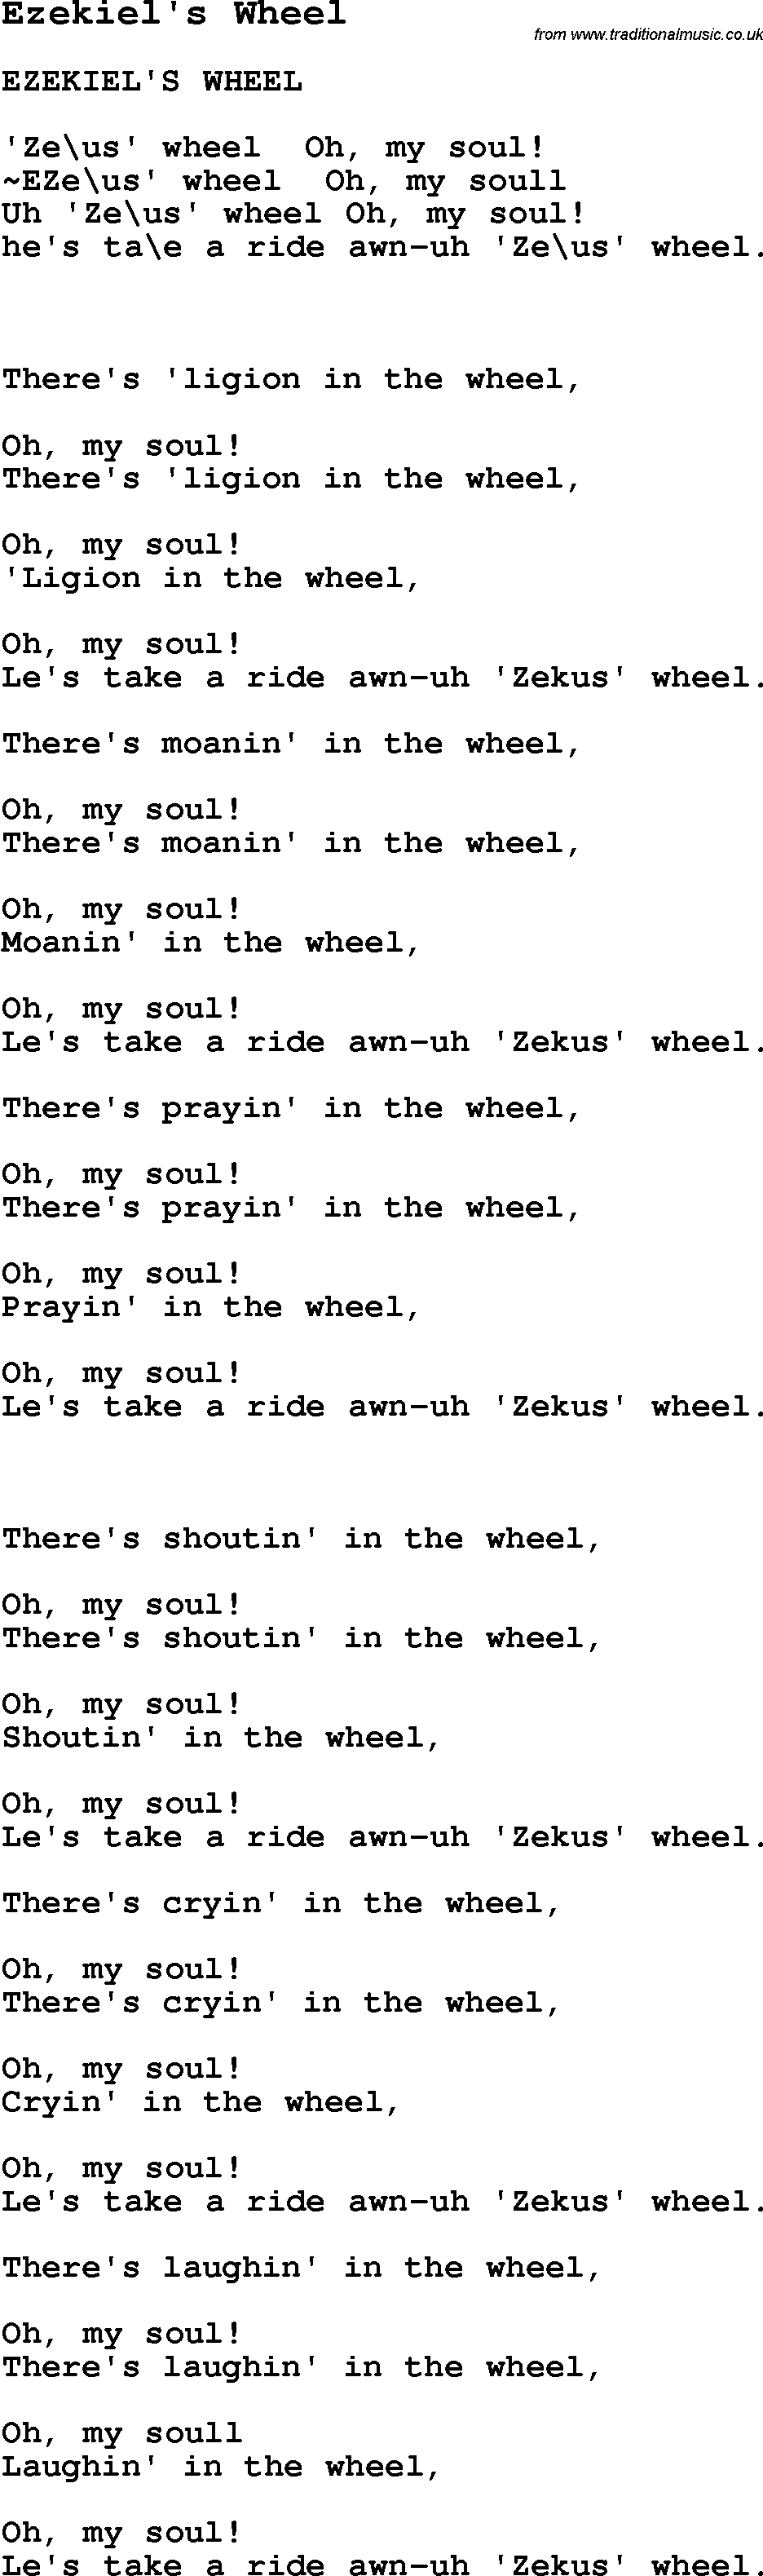 Negro Spiritual Song Lyrics for Ezekiel's Wheel